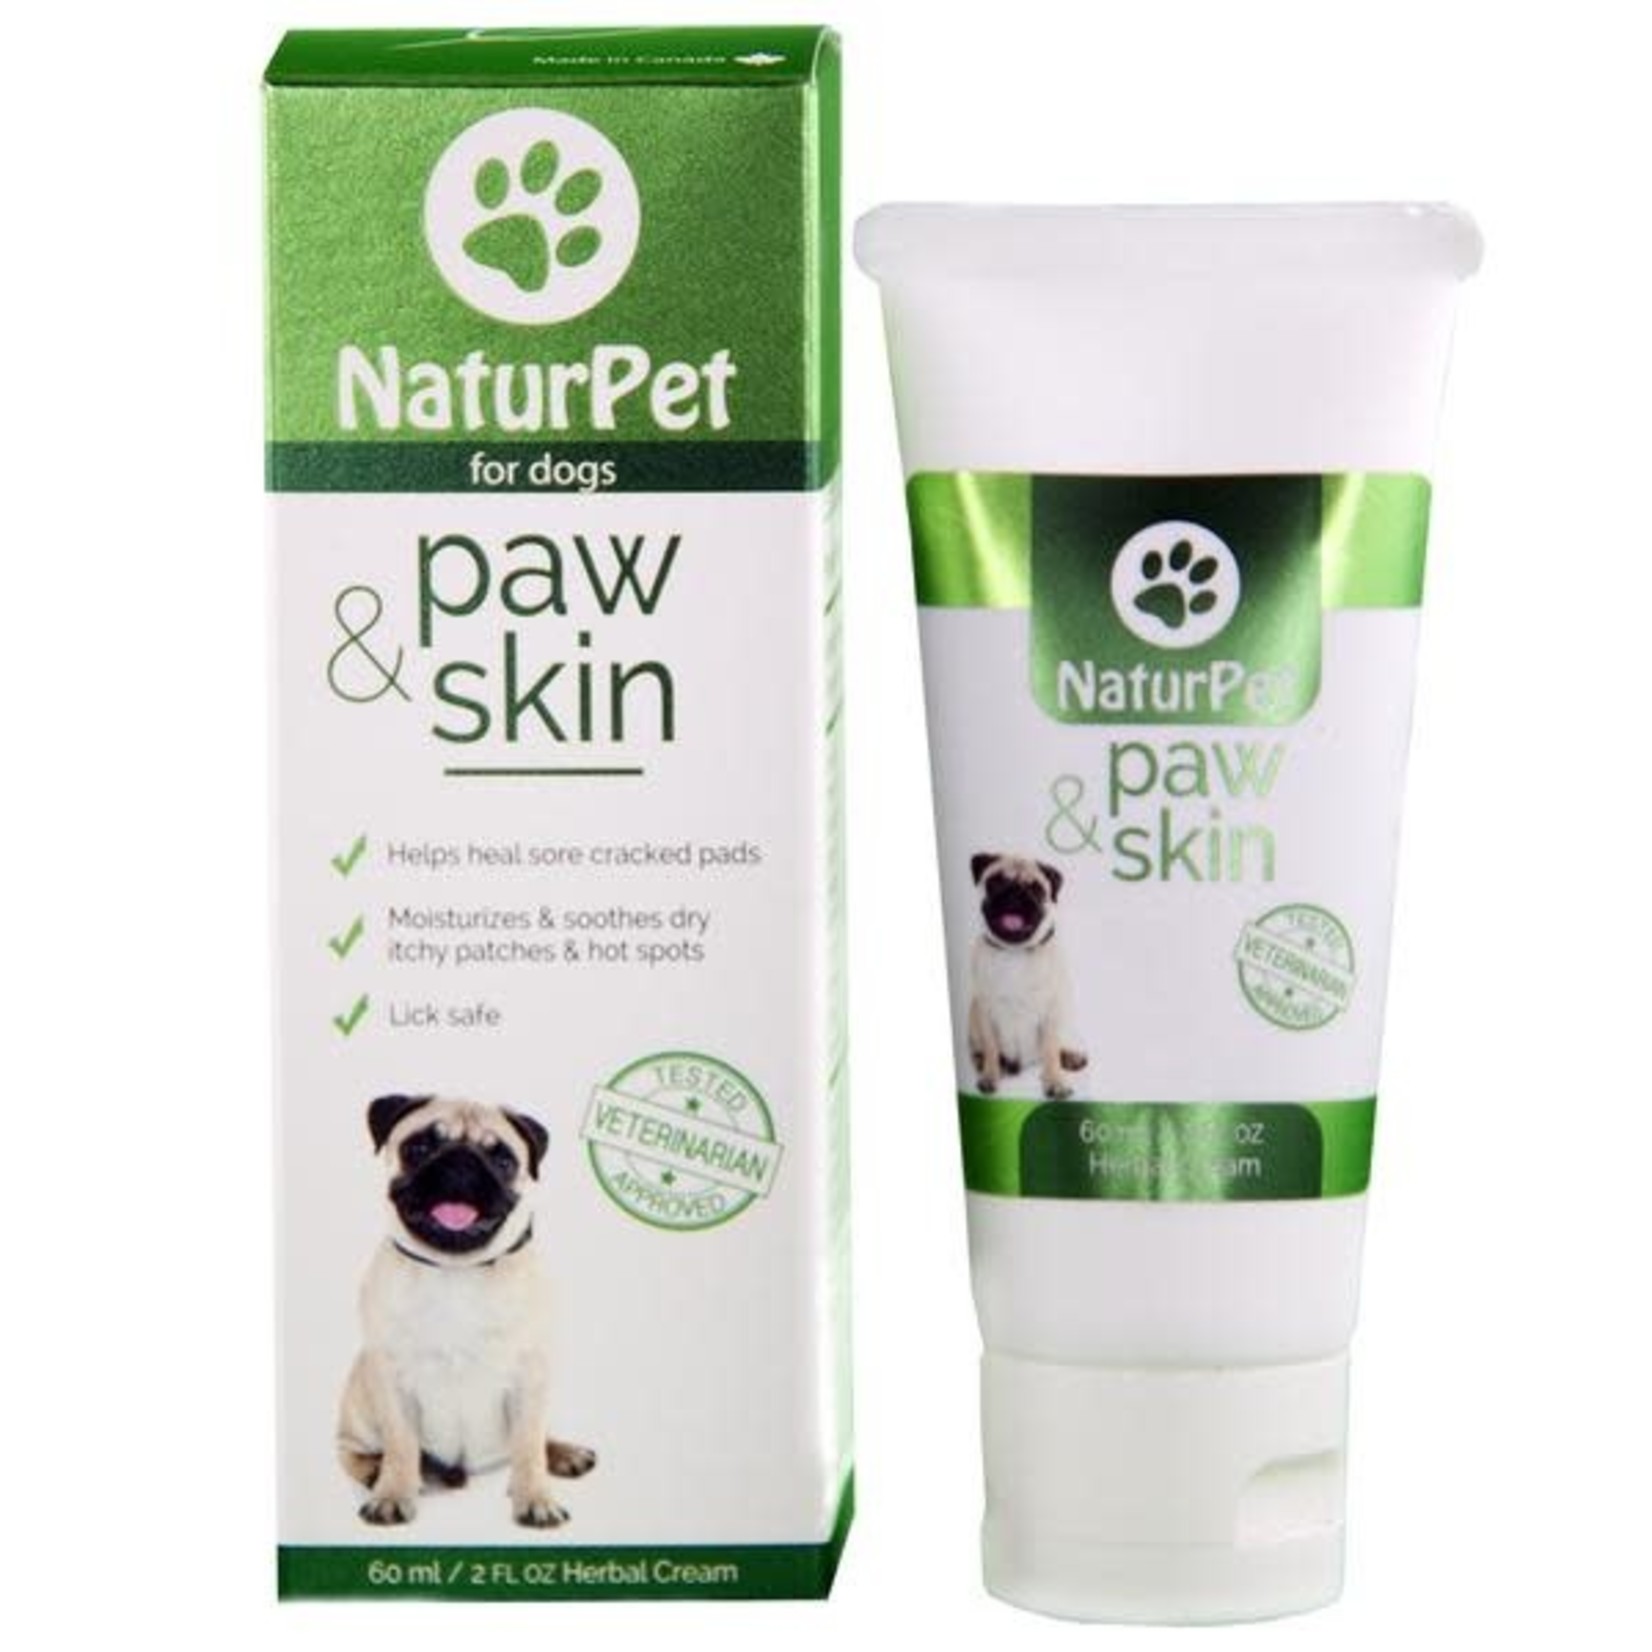 NaturPet NaturPet Paw & Skin 60ML